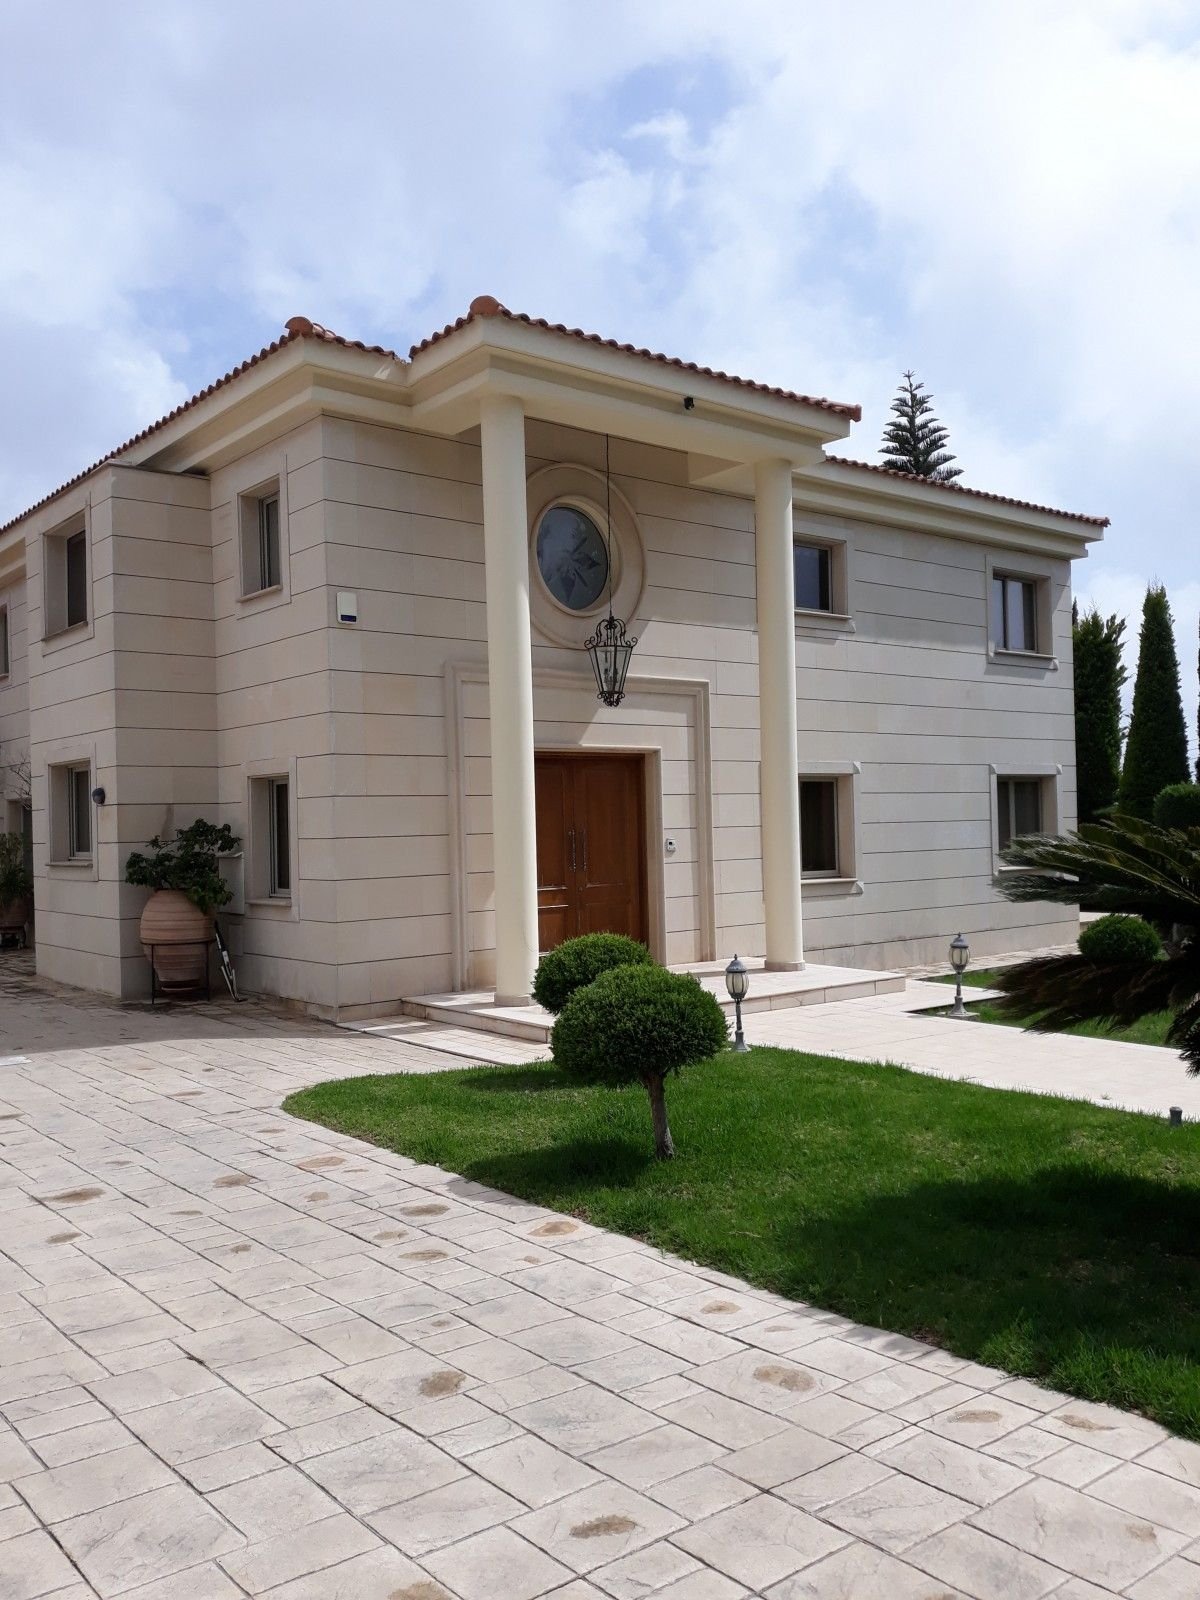 6+ Bedroom Villa for Sale in Tala, Paphos District